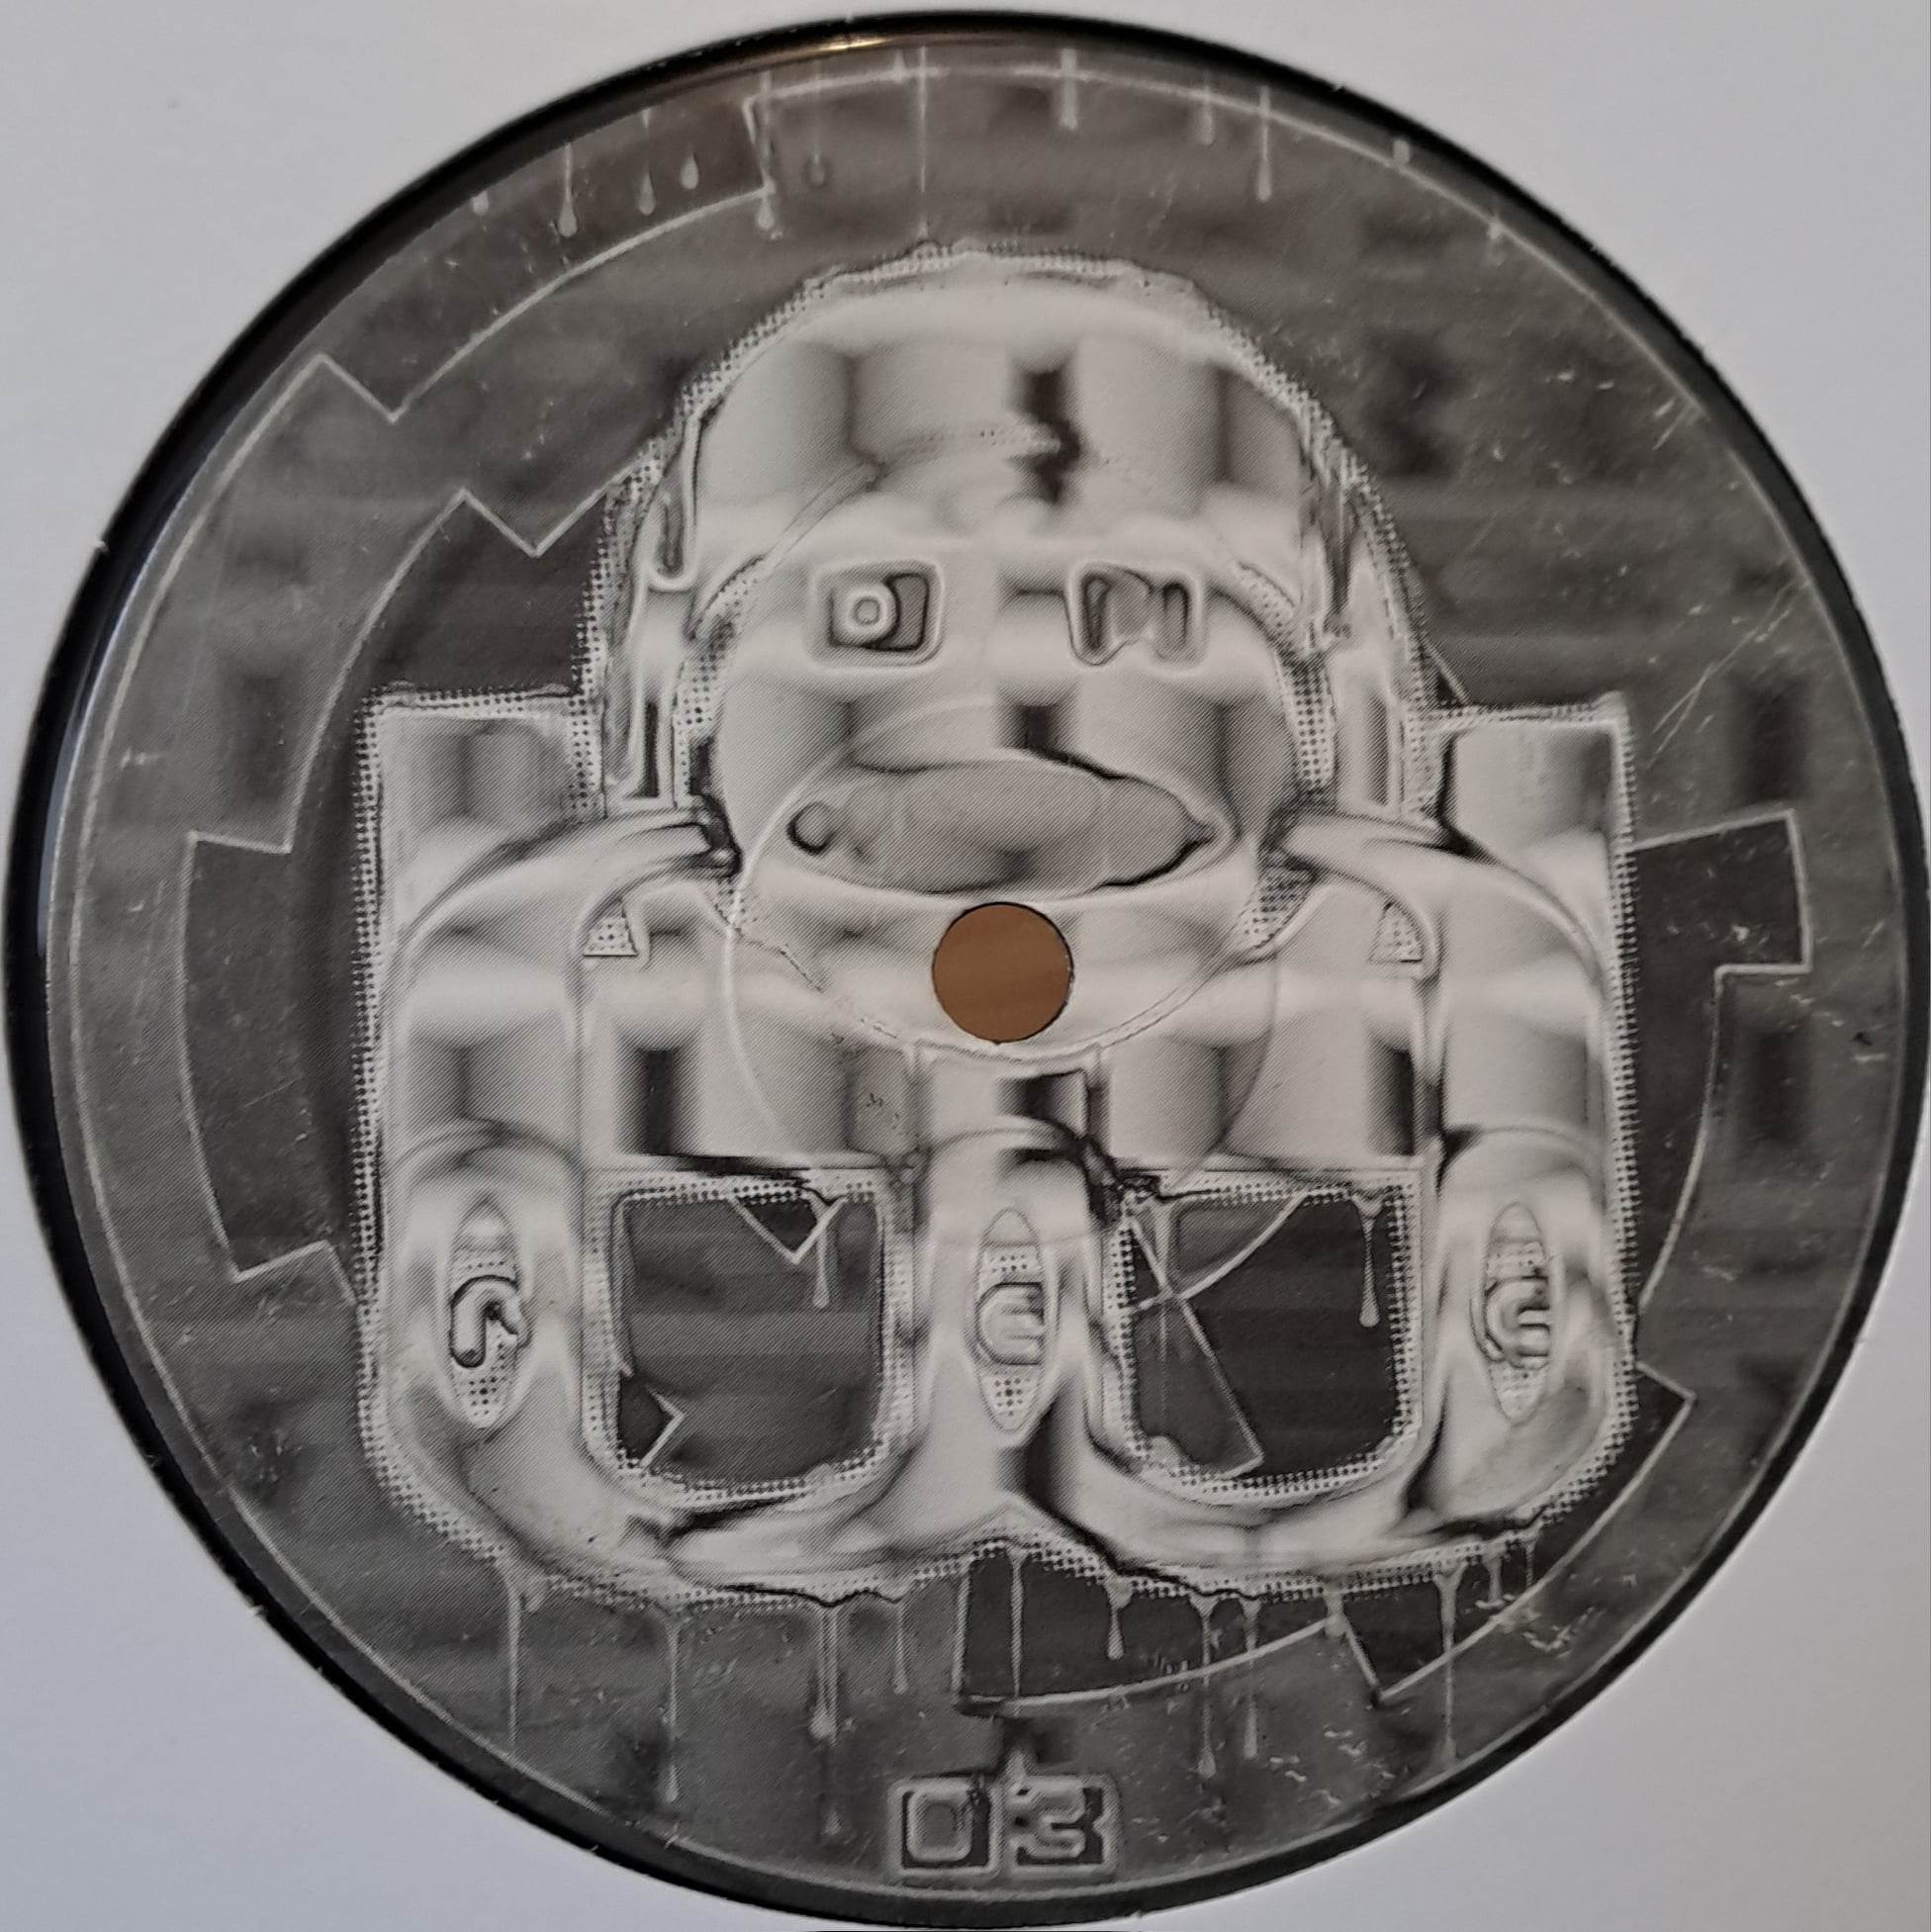 Omrec 03 - vinyle freetekno